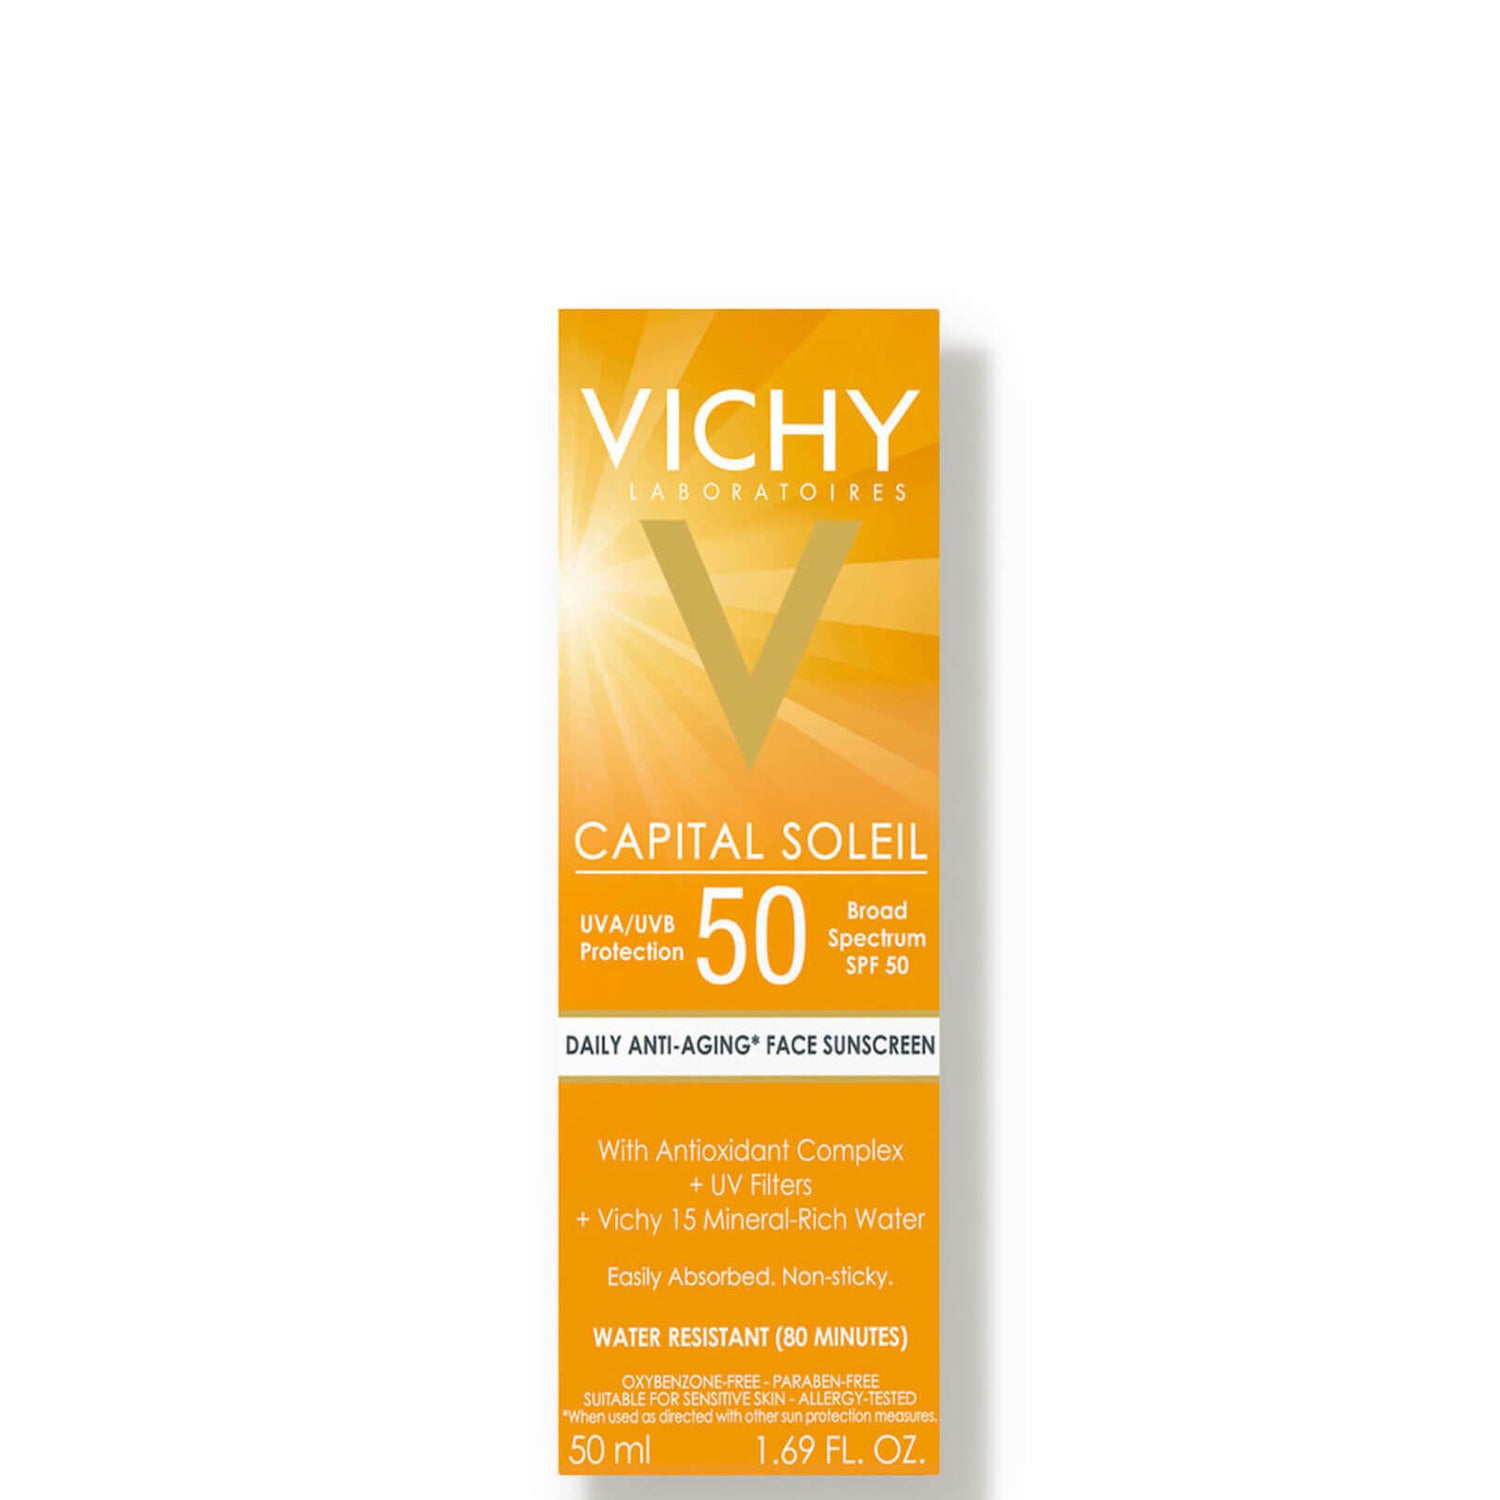 Vichy Capital Soleil Daily Anti-Aging Sunscreen SPF 50 (1.69 fl. oz.)